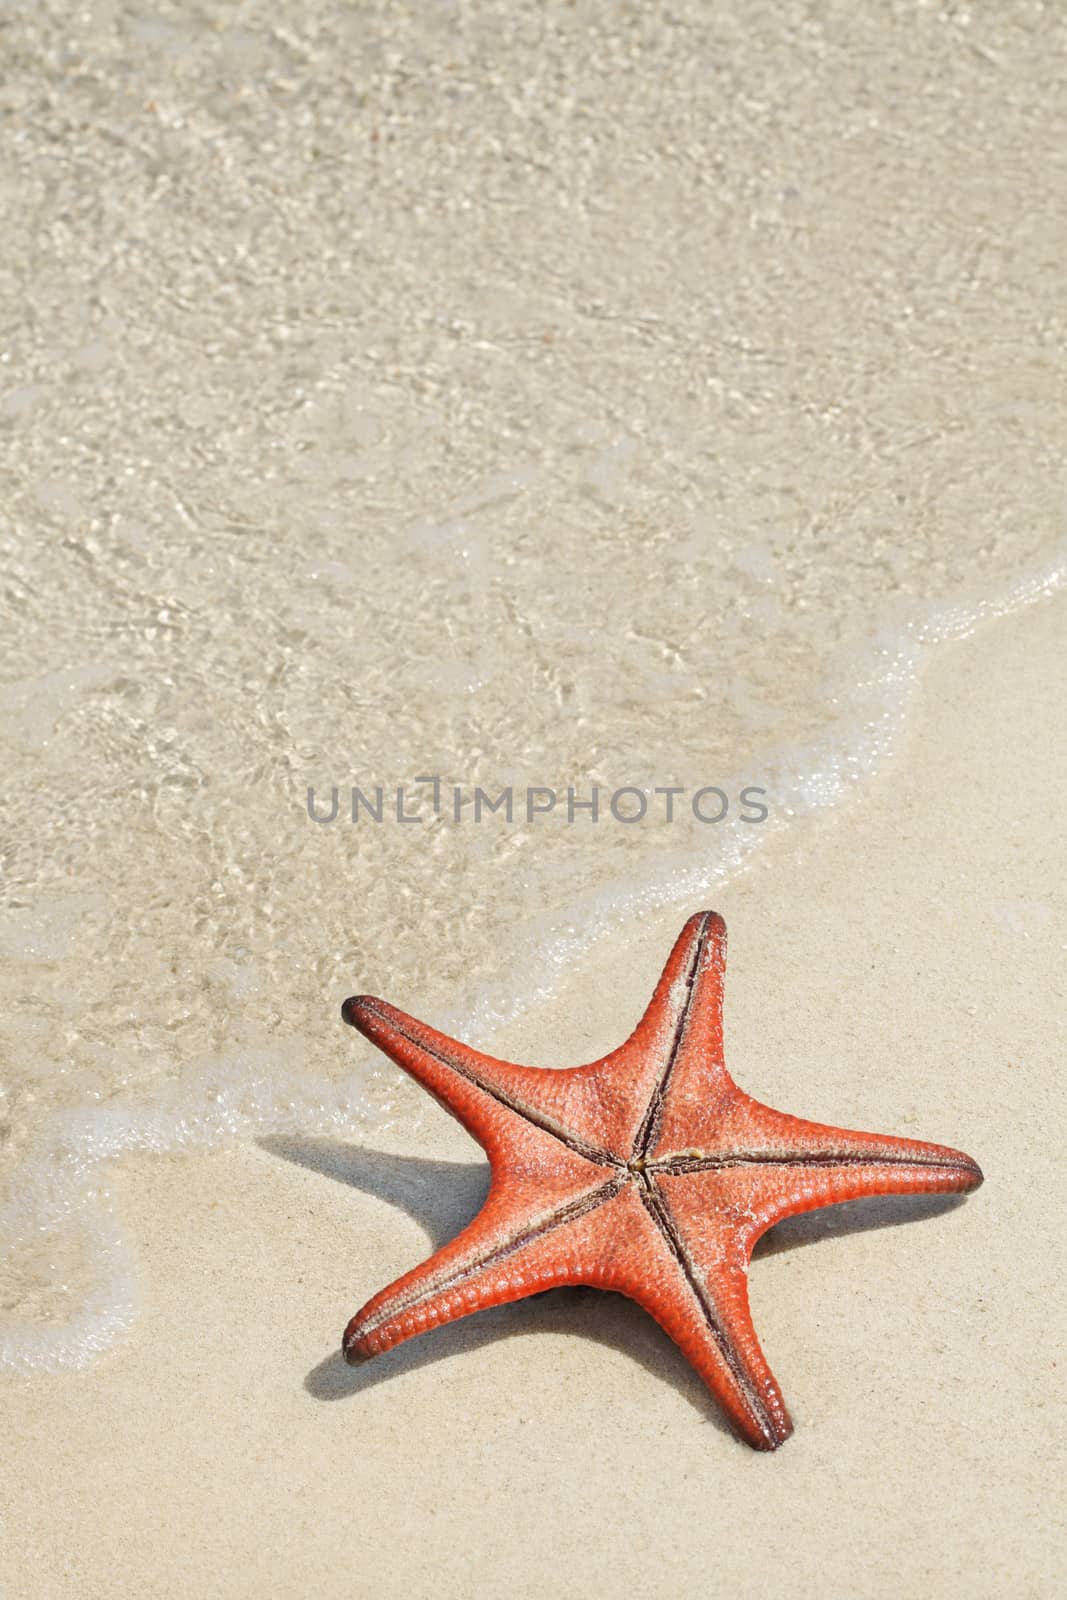 Star fish on the white sandy beach